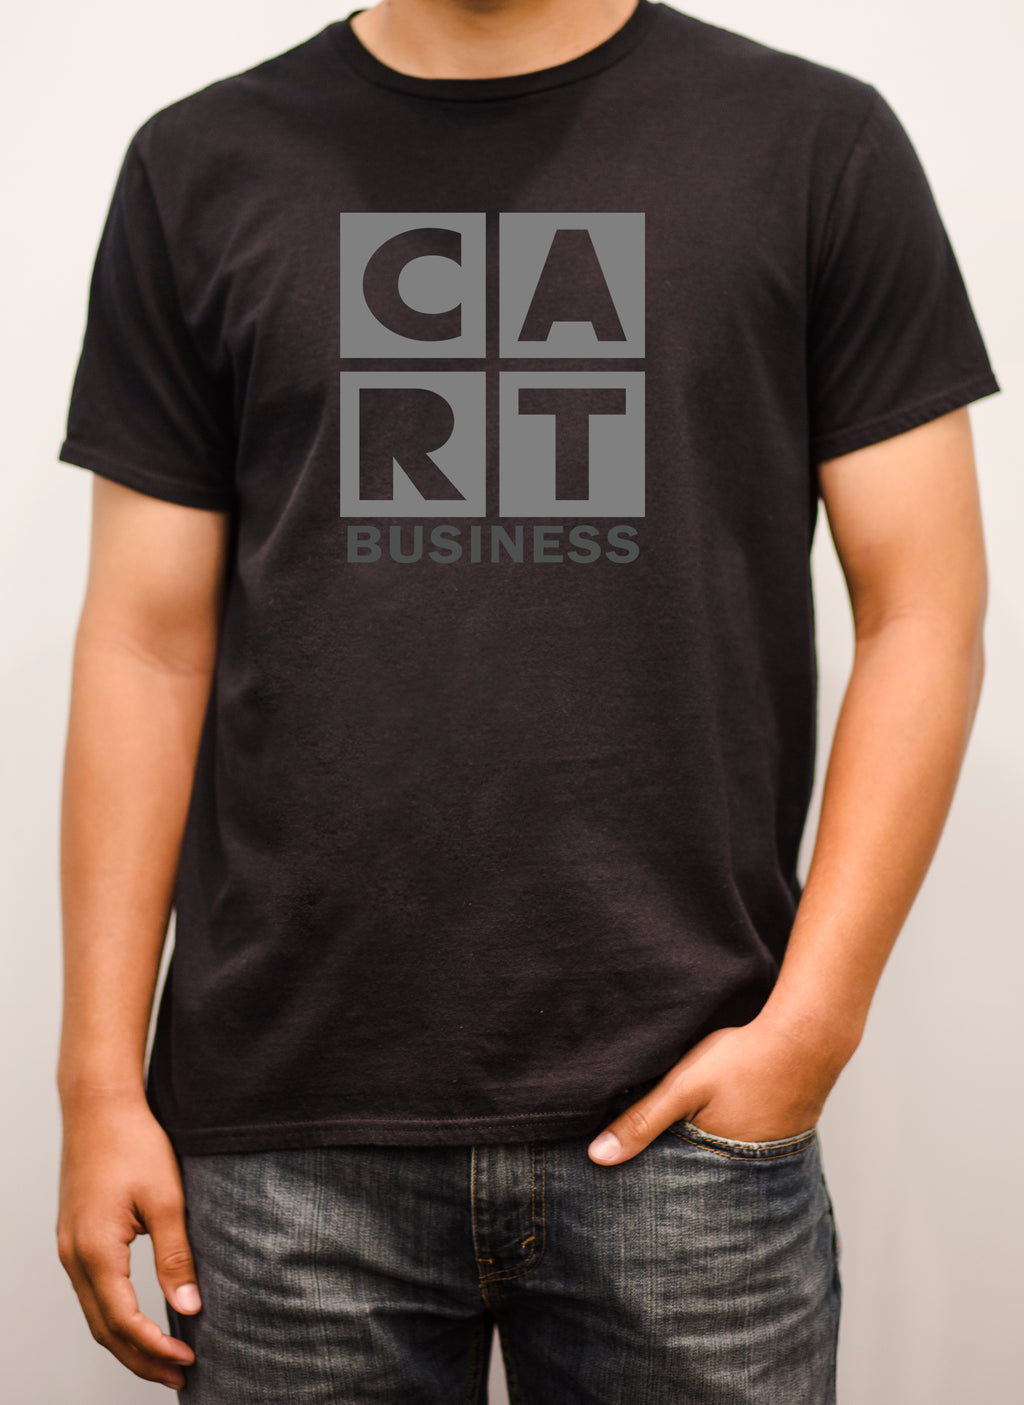 Short sleeve t-shirt (Unisex fit) - Business black/grey logo